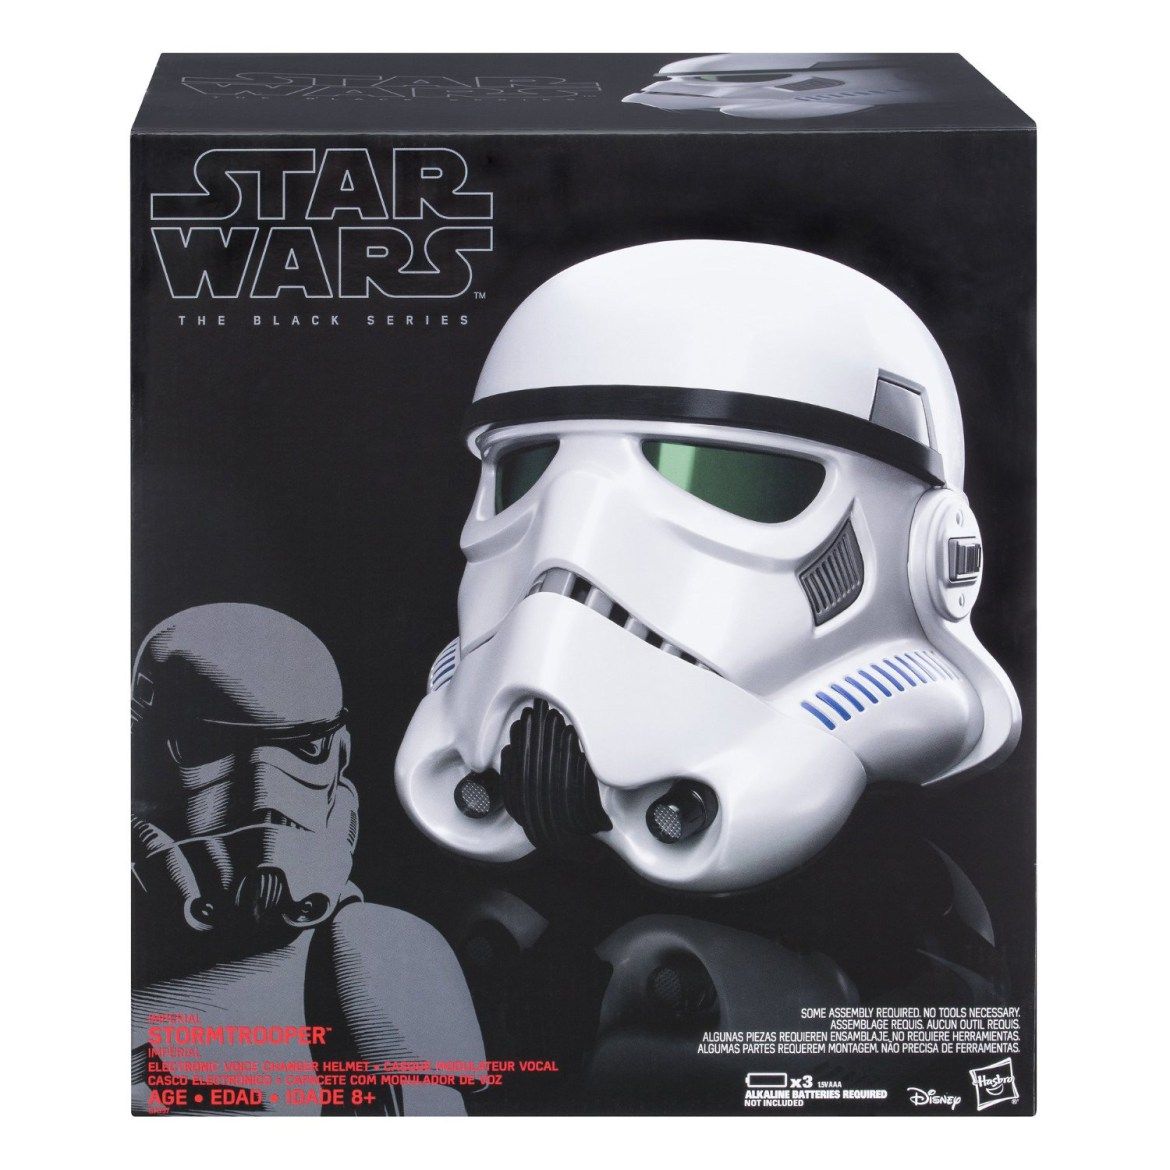 Star Wars Rogue One stormtrooper helmet box